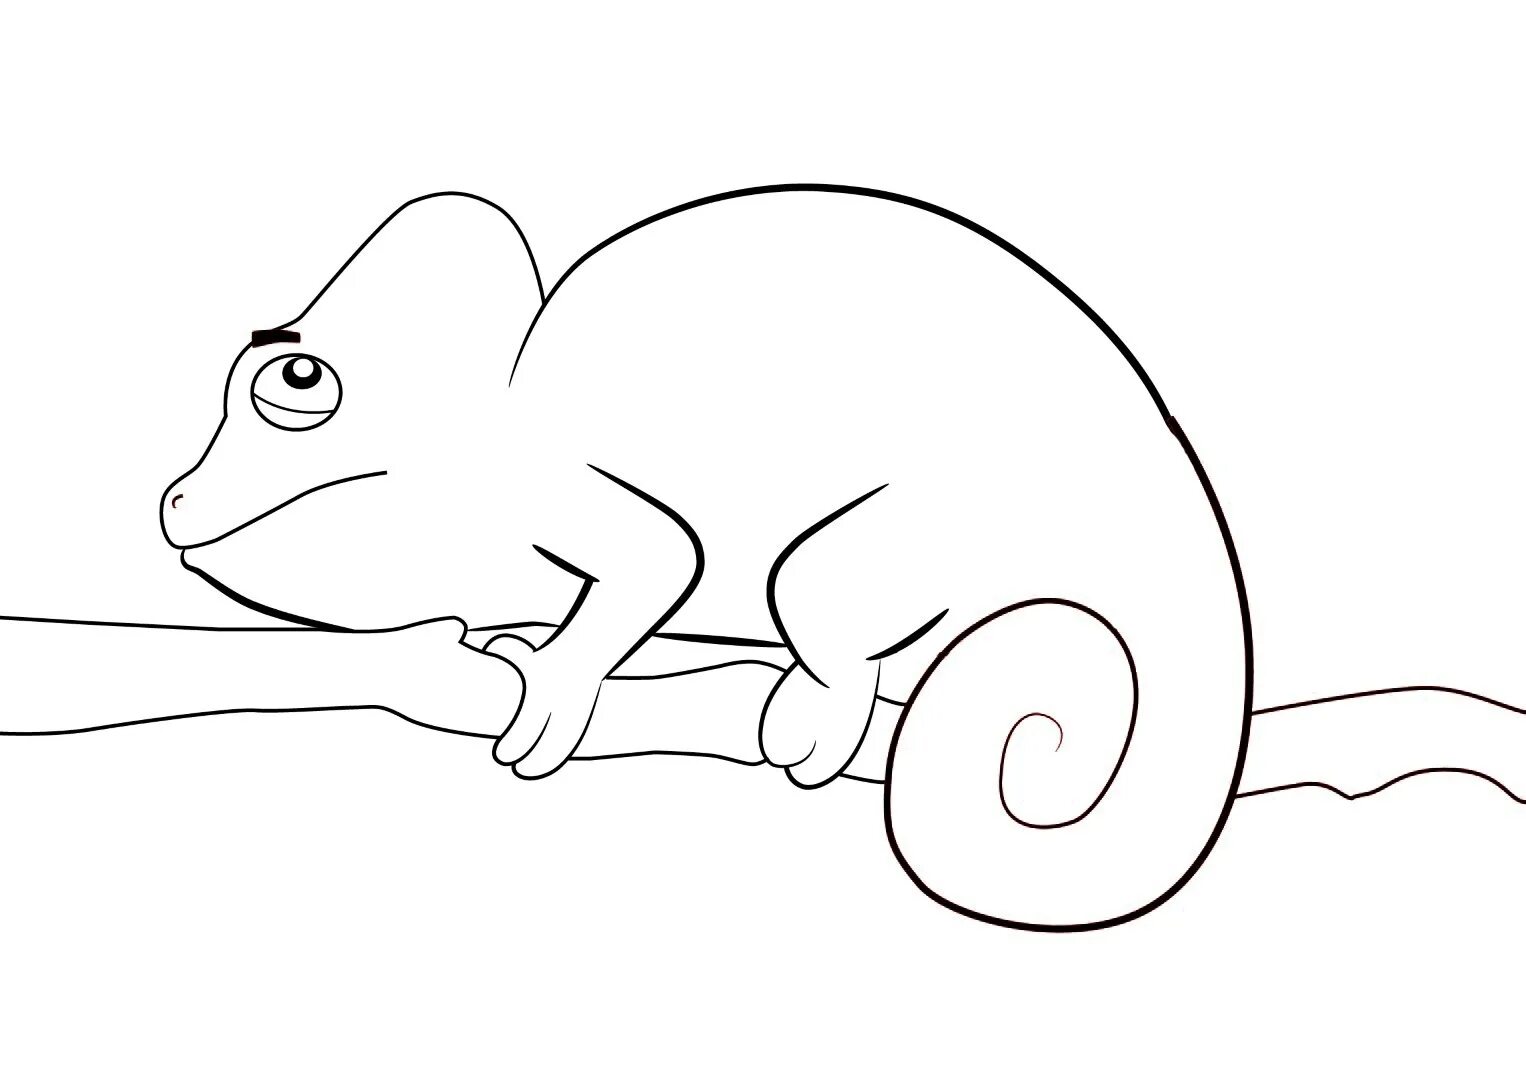 Chameleon drawing #2